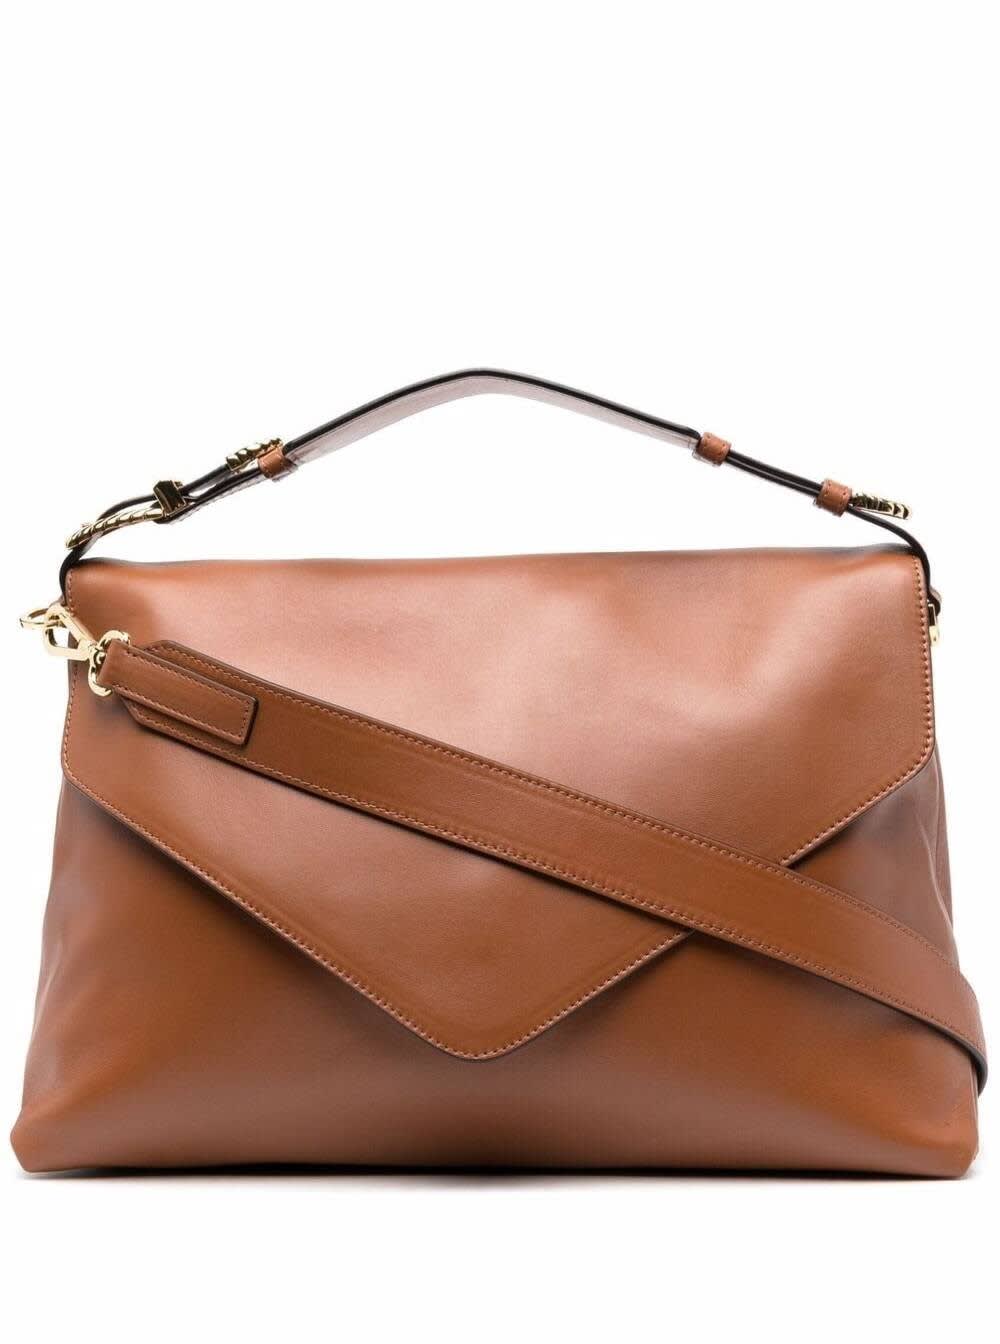 Alberta Ferretti Brown Leather Crossbody Bag